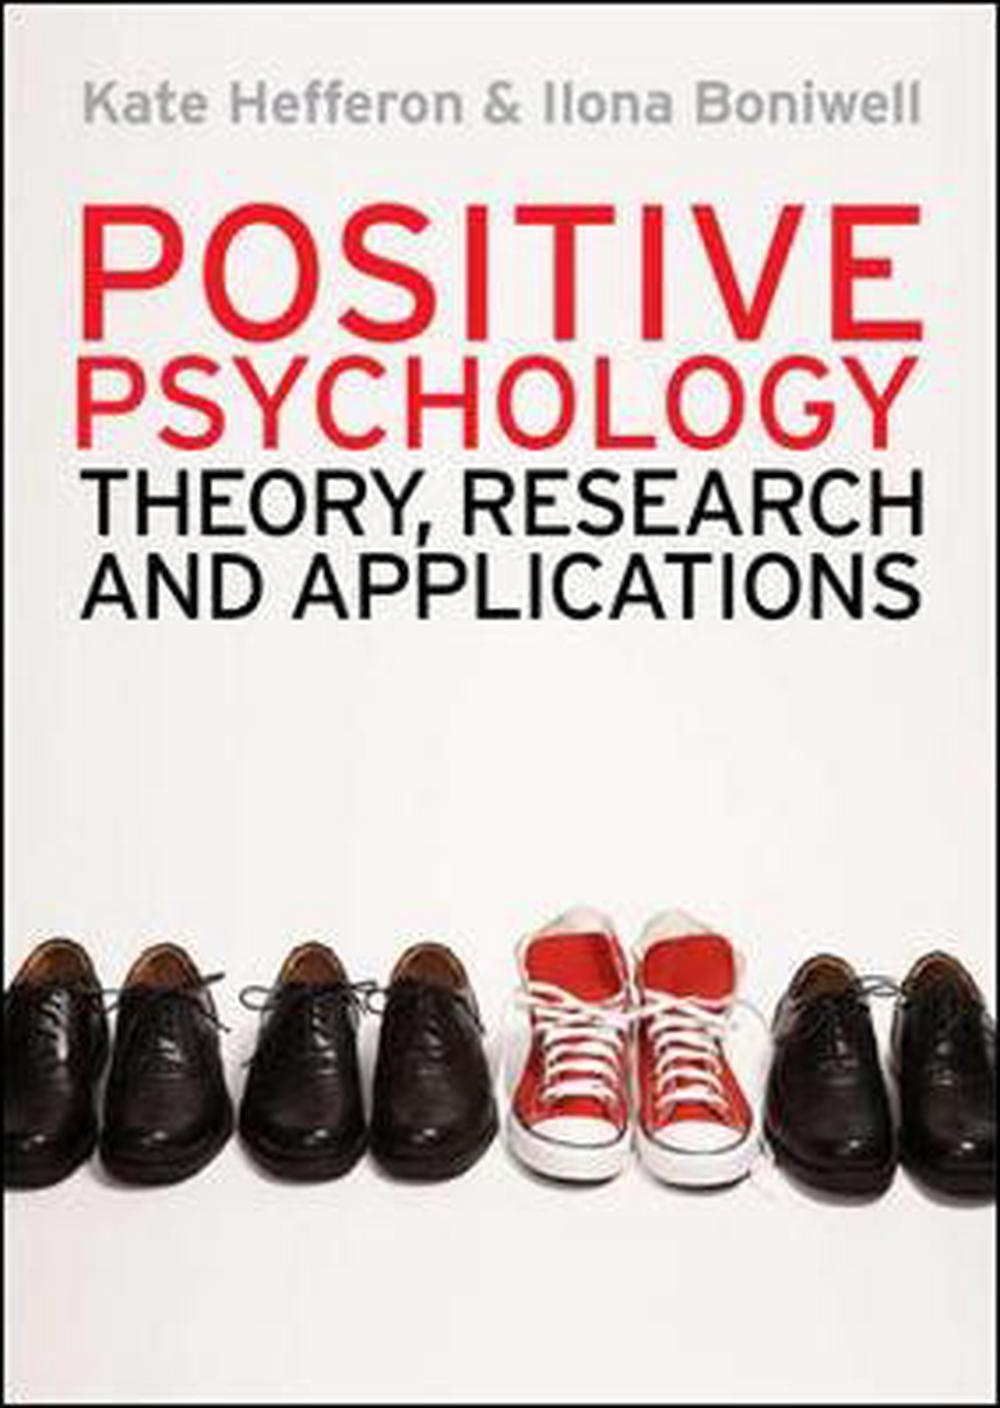 research on positive psychology